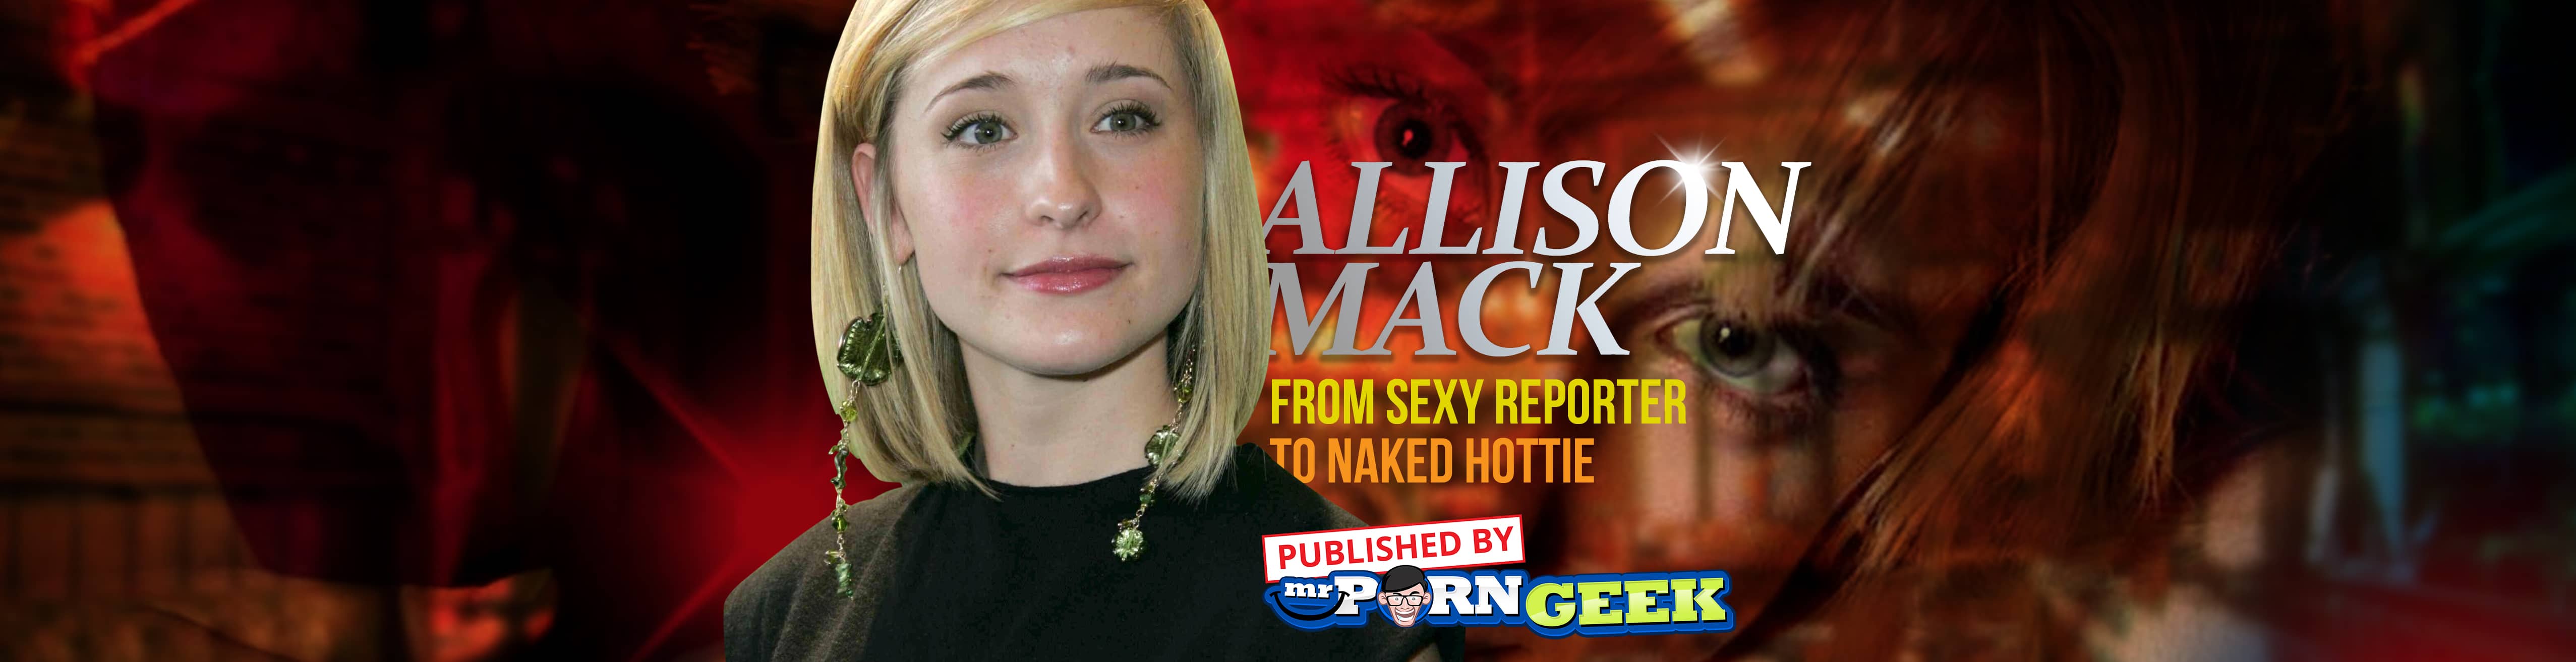 Allison mack the fappening